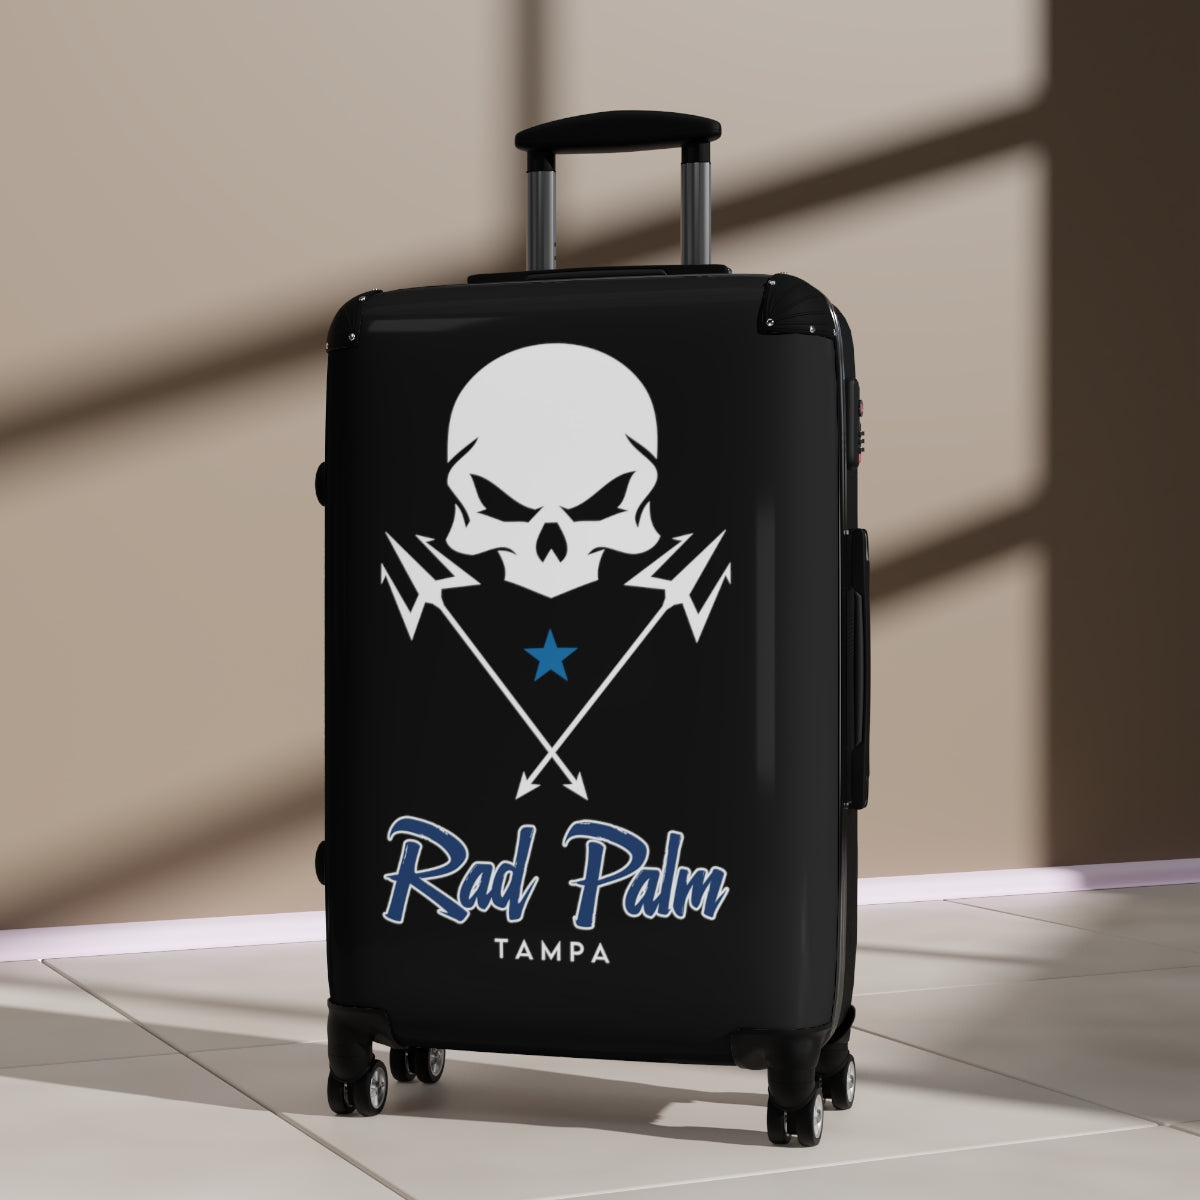 Rad Palm Submariner Travel Roller Bag